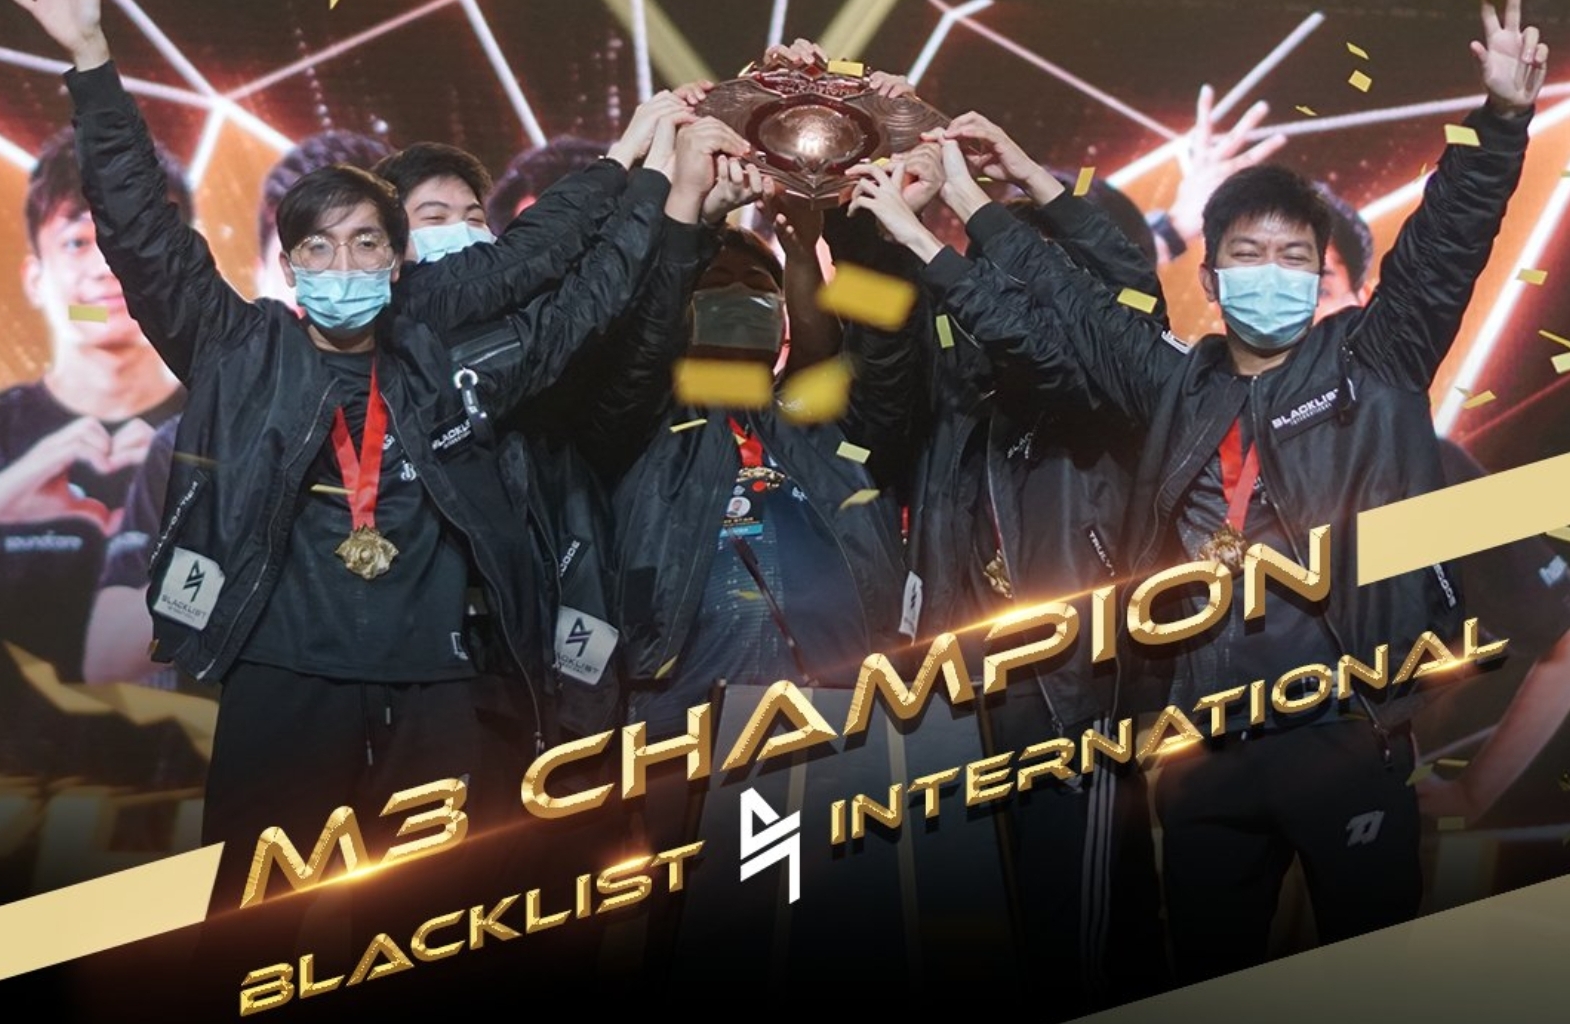 Blacklist International M3 Champs